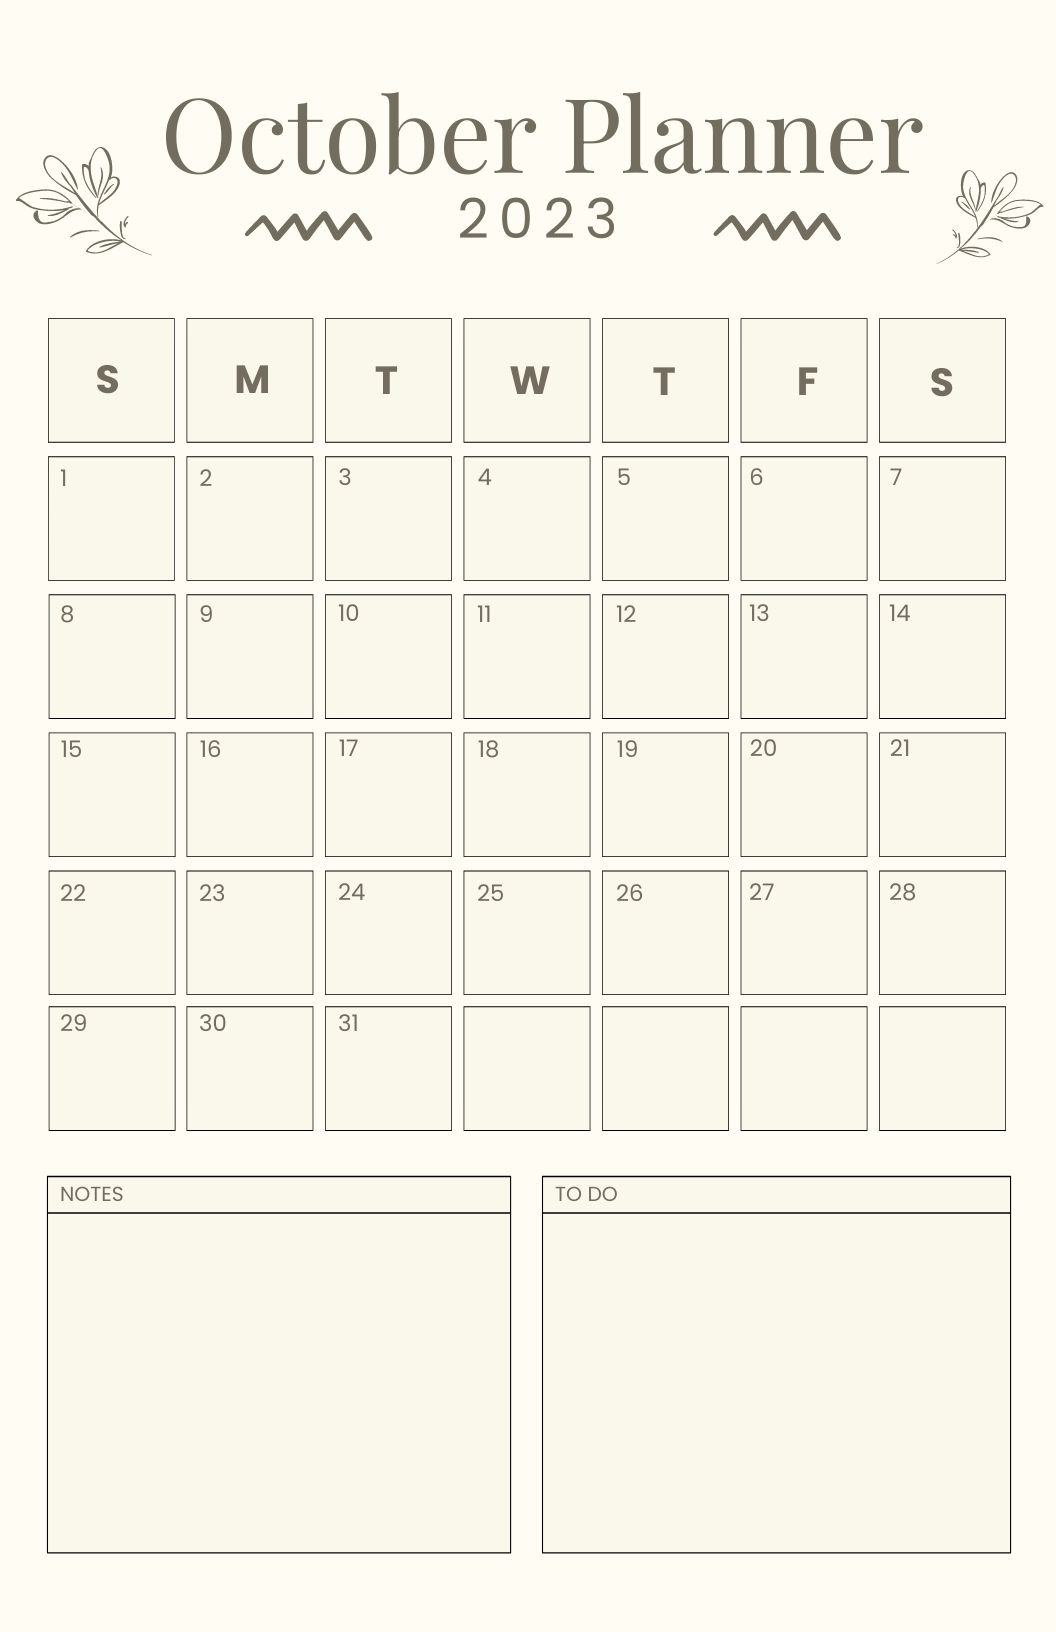 Printable October 2023 Deskpad Planner in Word, PDF, Illustrator